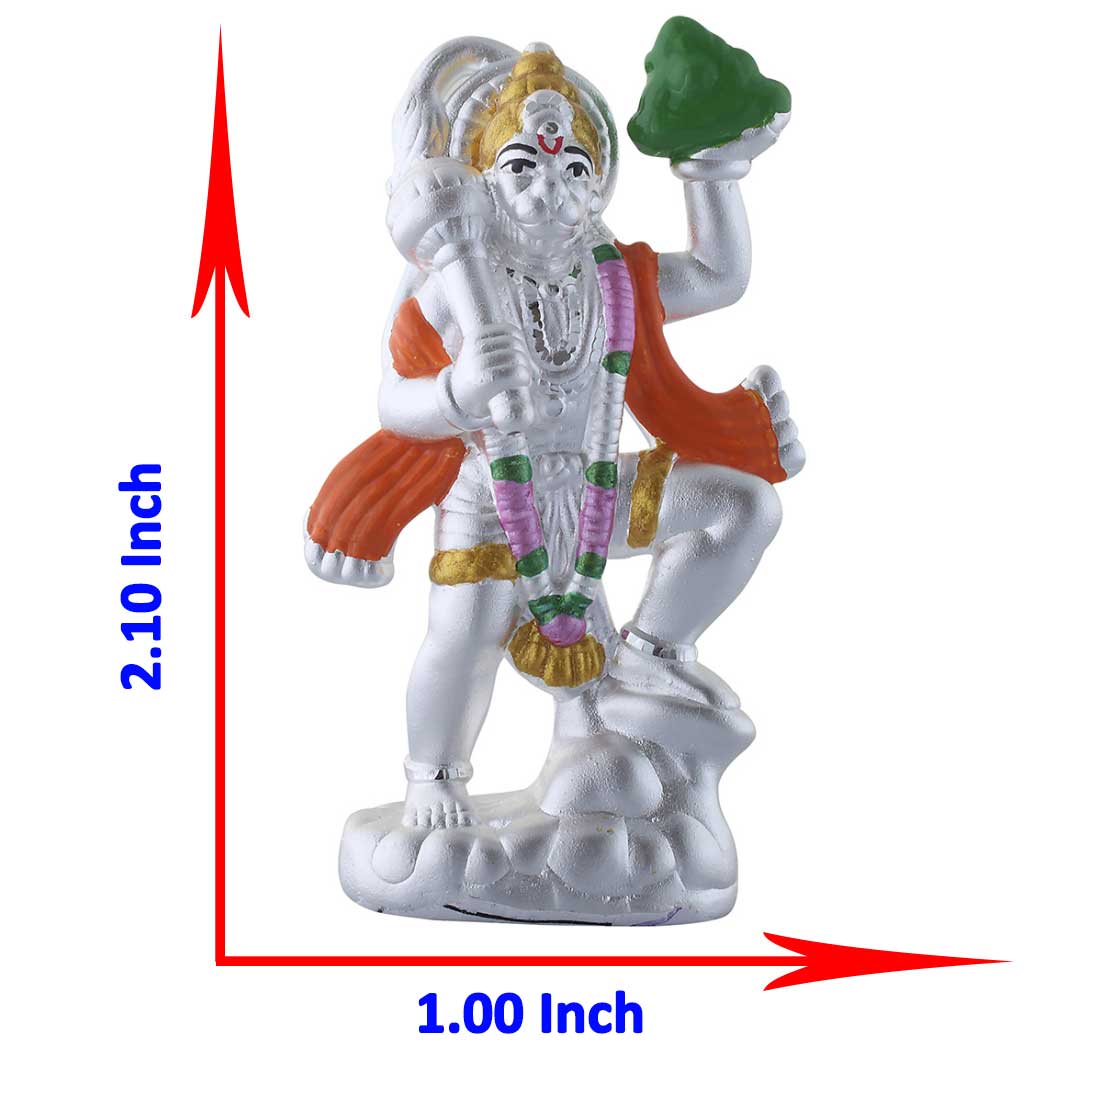 size of hanuman idol